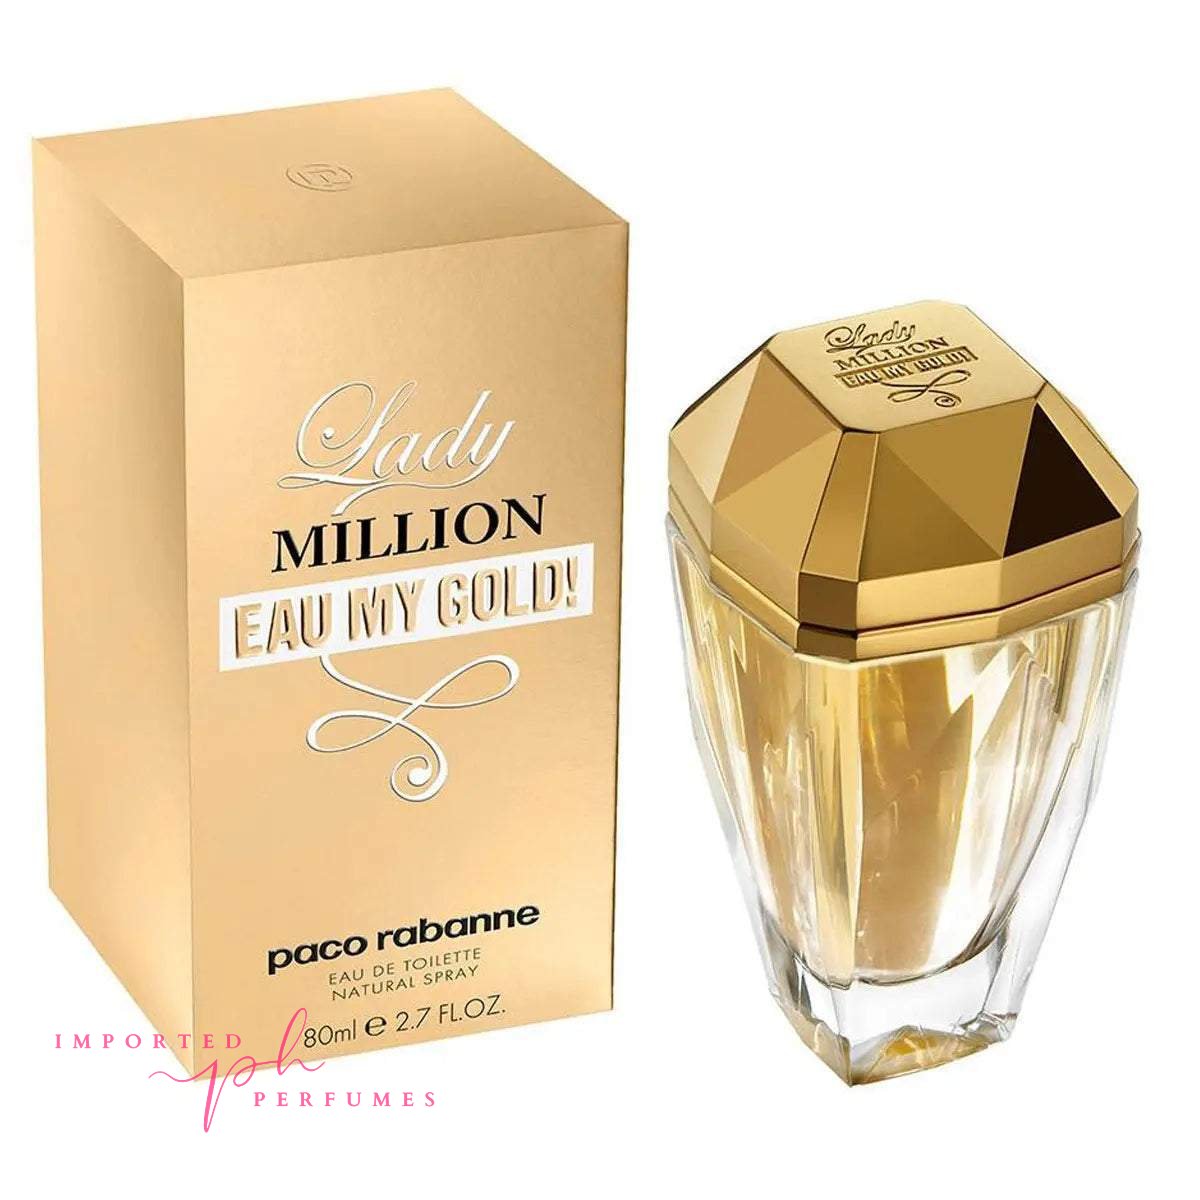 Lady Million Eau My Gold! By Paco Rabanne Eau de Toilette 100ml-Imported Perfumes Co-For WOmen,My gold,paco,Paco Rabanne,Paco Women,Women,Women perfume